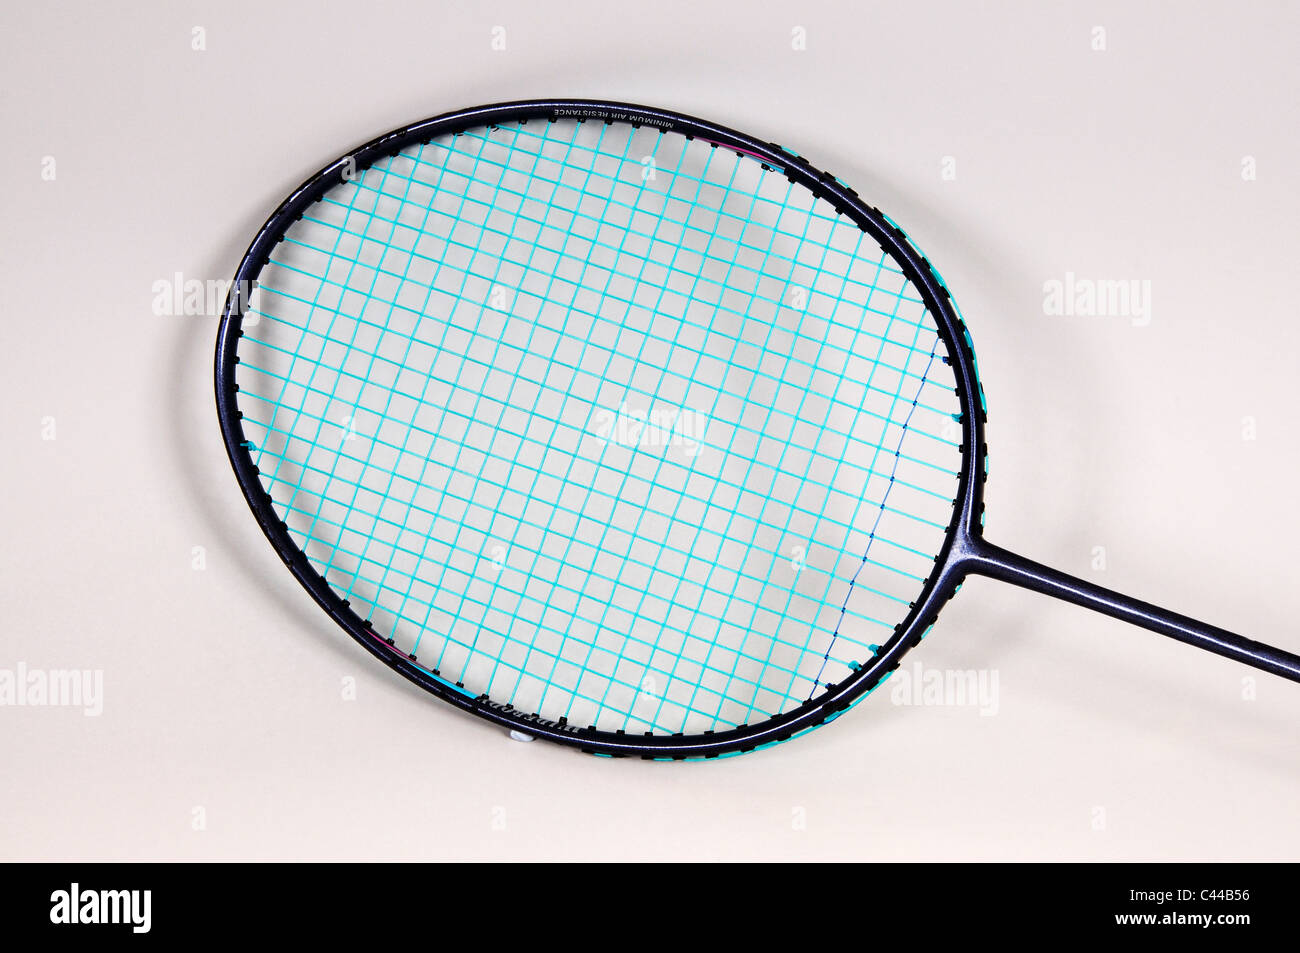 Badminton racquet, Calypso, Costa del Sol, Malaga Province, Andalucia, Spain, Western Europe. Stock Photo